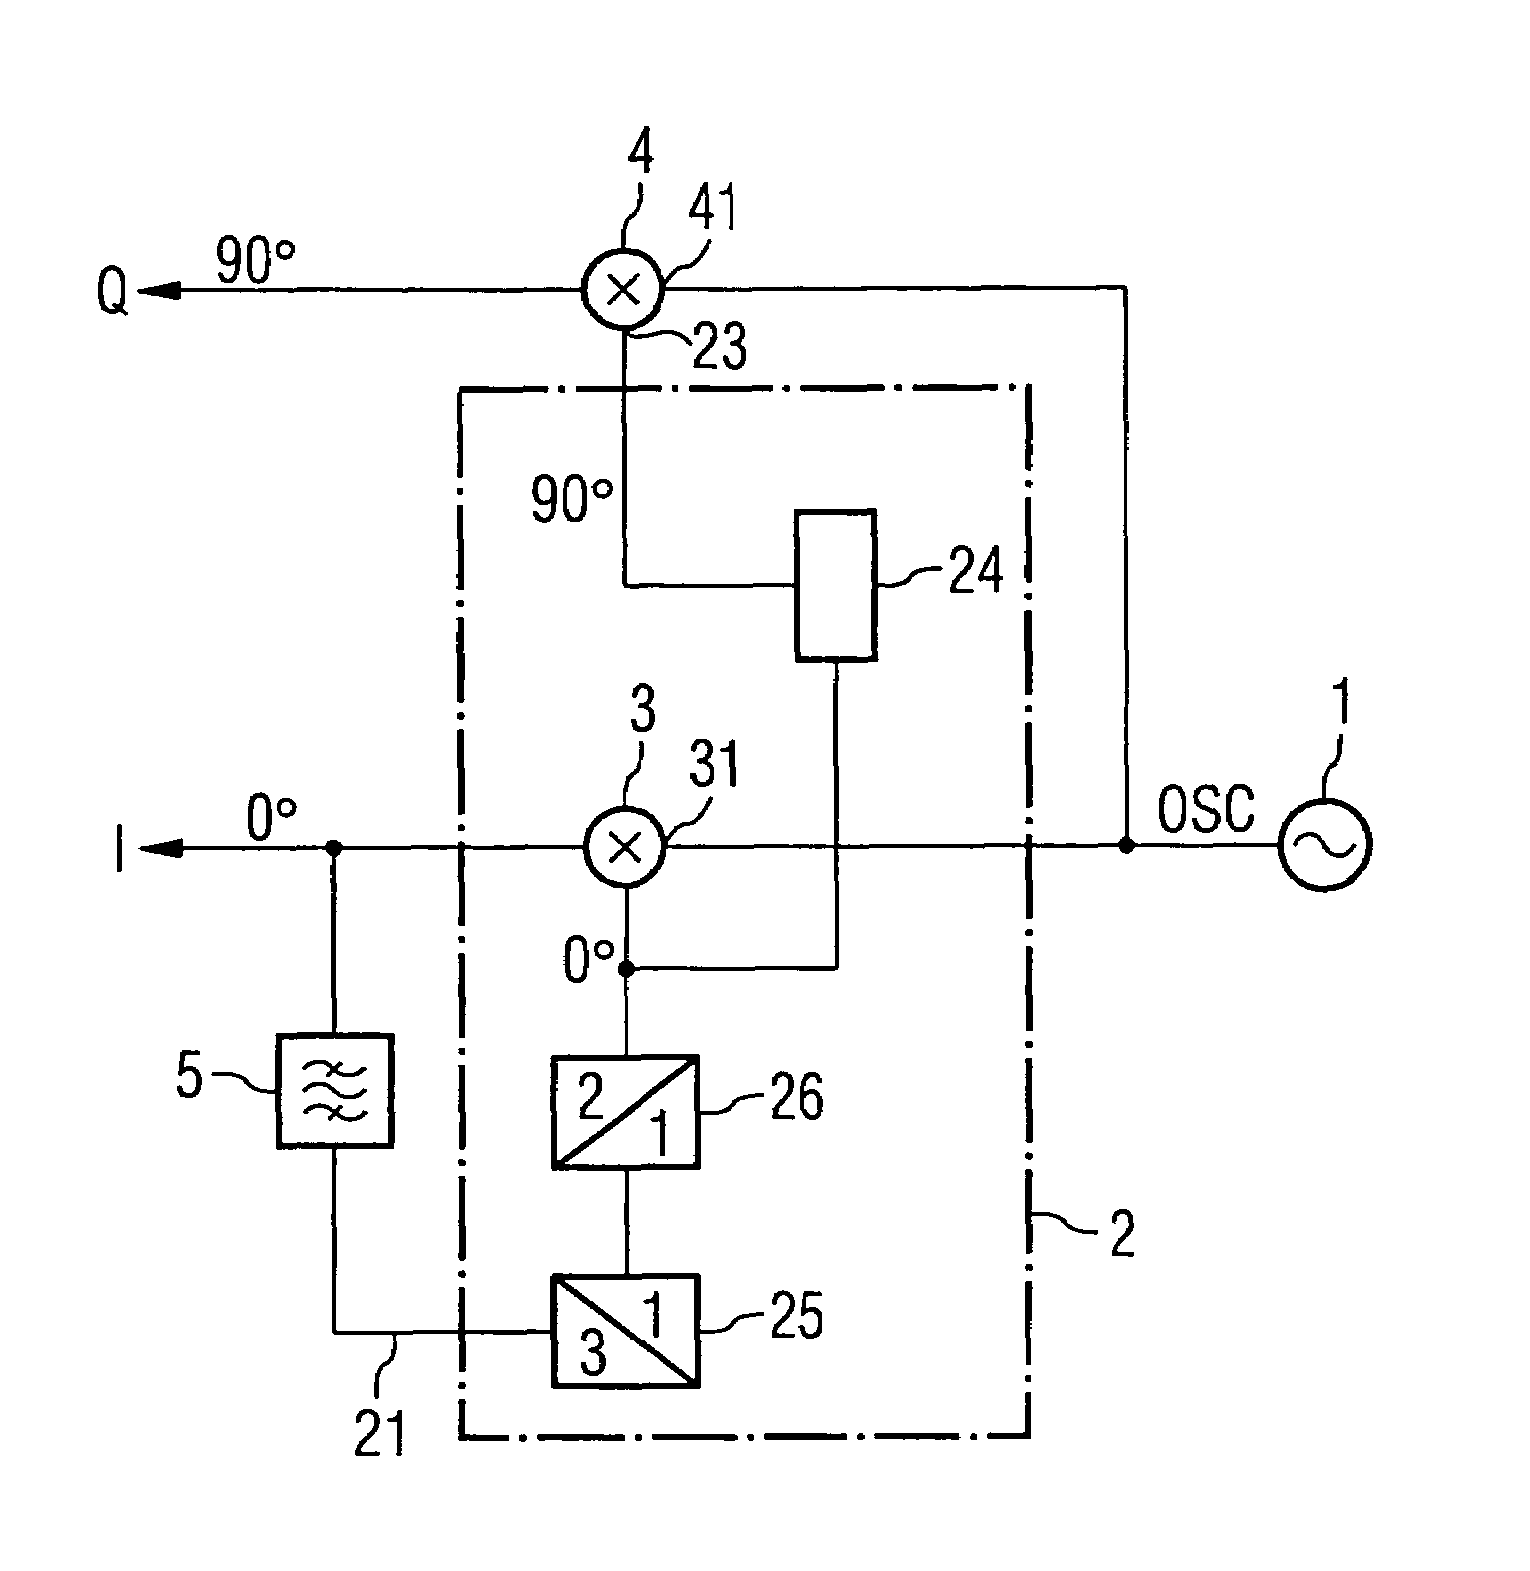 Signal conditioning circuit